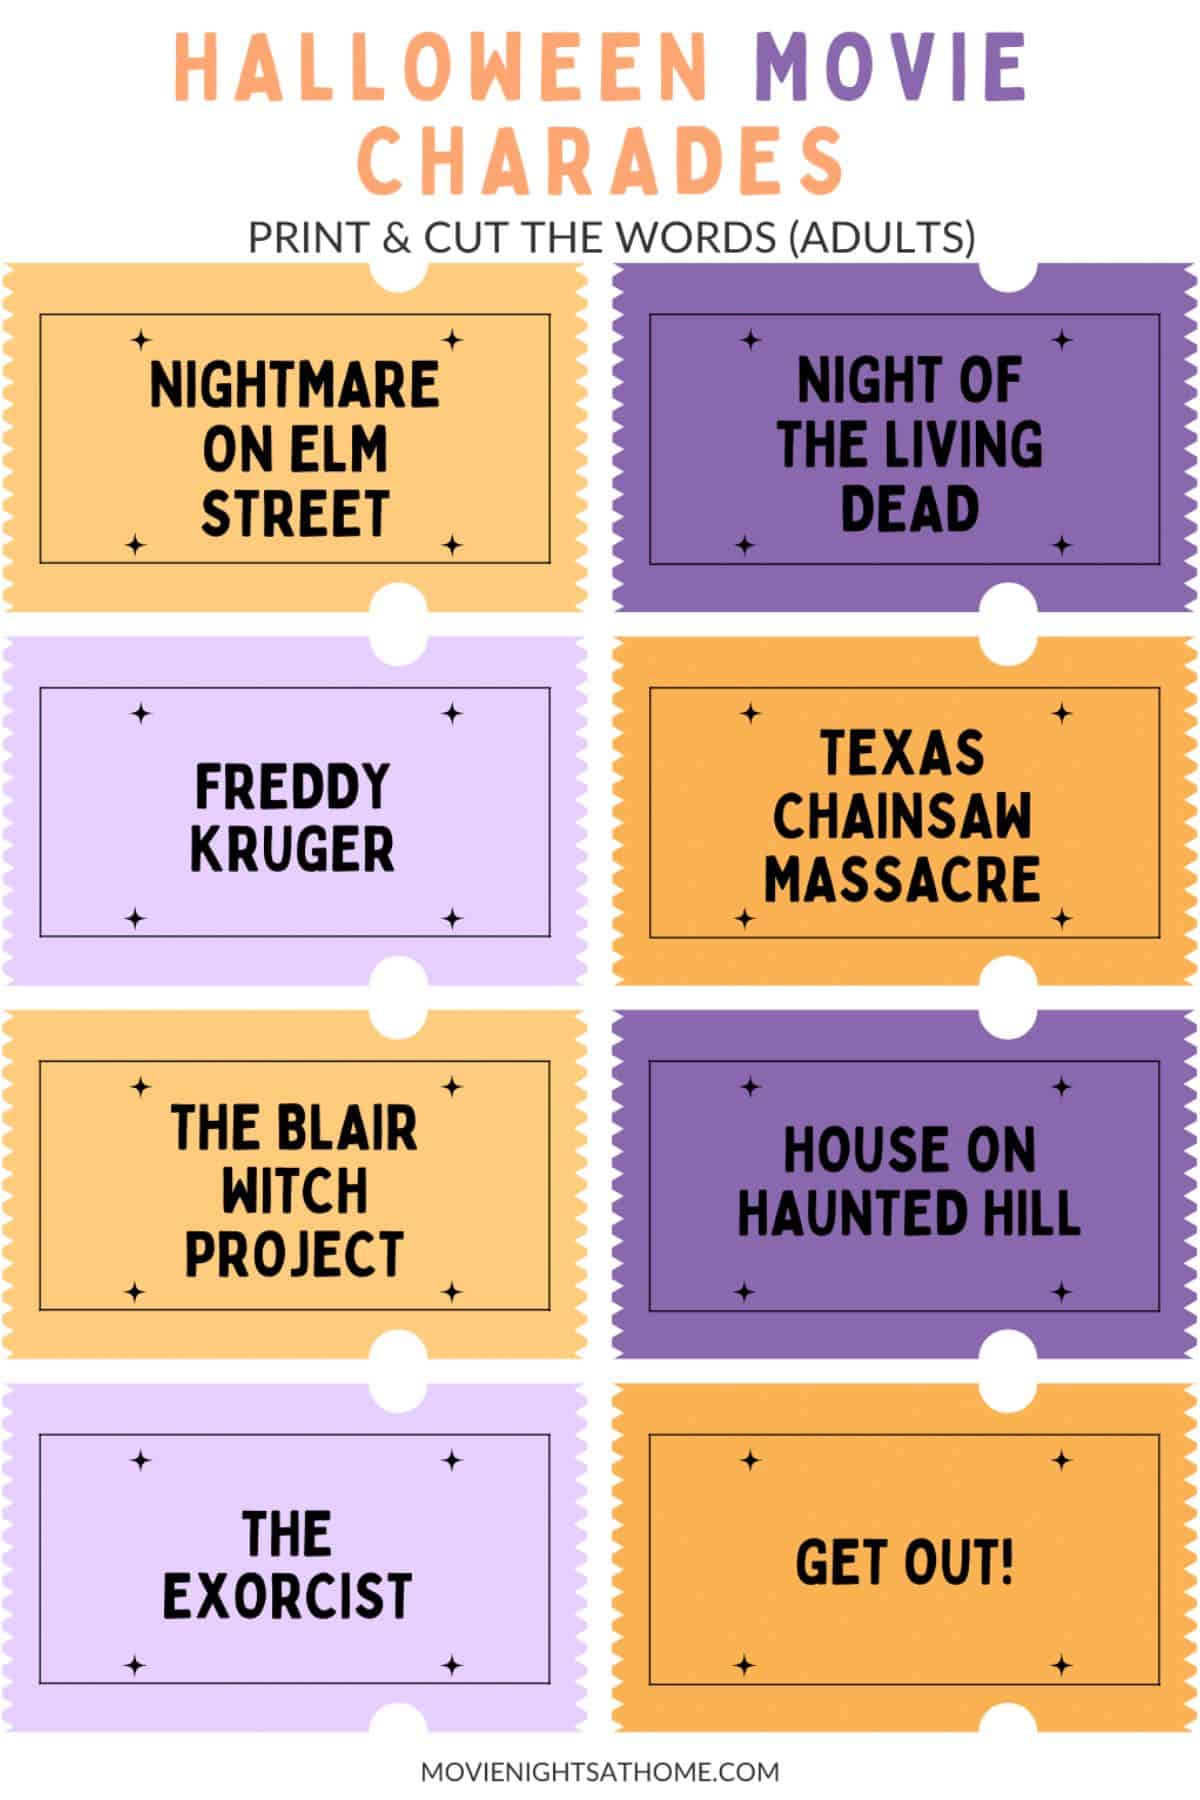 sneak peek at the Halloween charades word list free printable